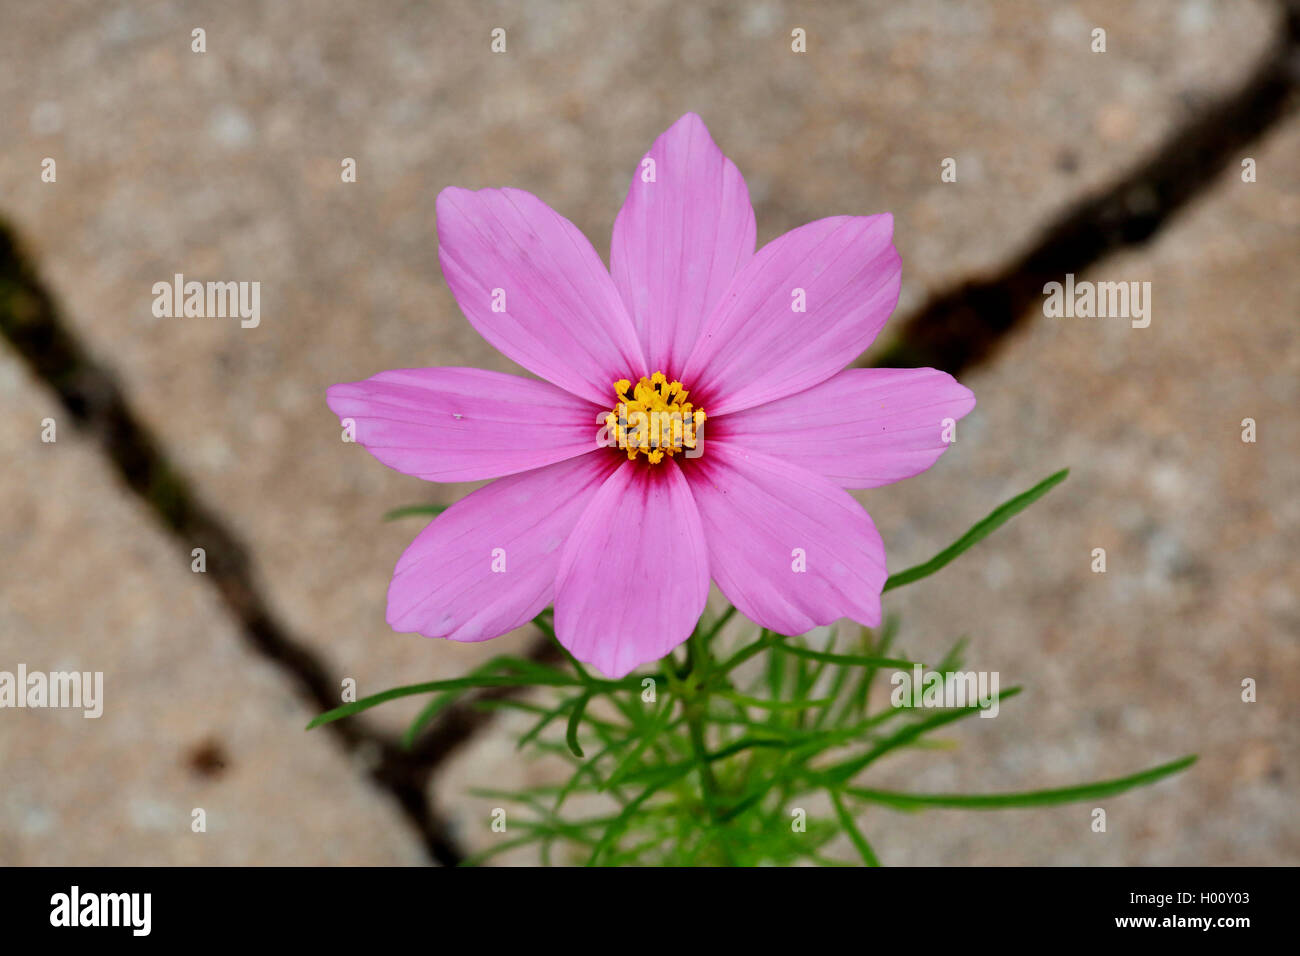 Schmuckkoerbchen, Schmuck-Koerbchen, Fiederblaettrige Schmuckblume, Cosmea, Kosmee (Cosmos bipinnatus), verwildert in einer Pfla Stock Photo